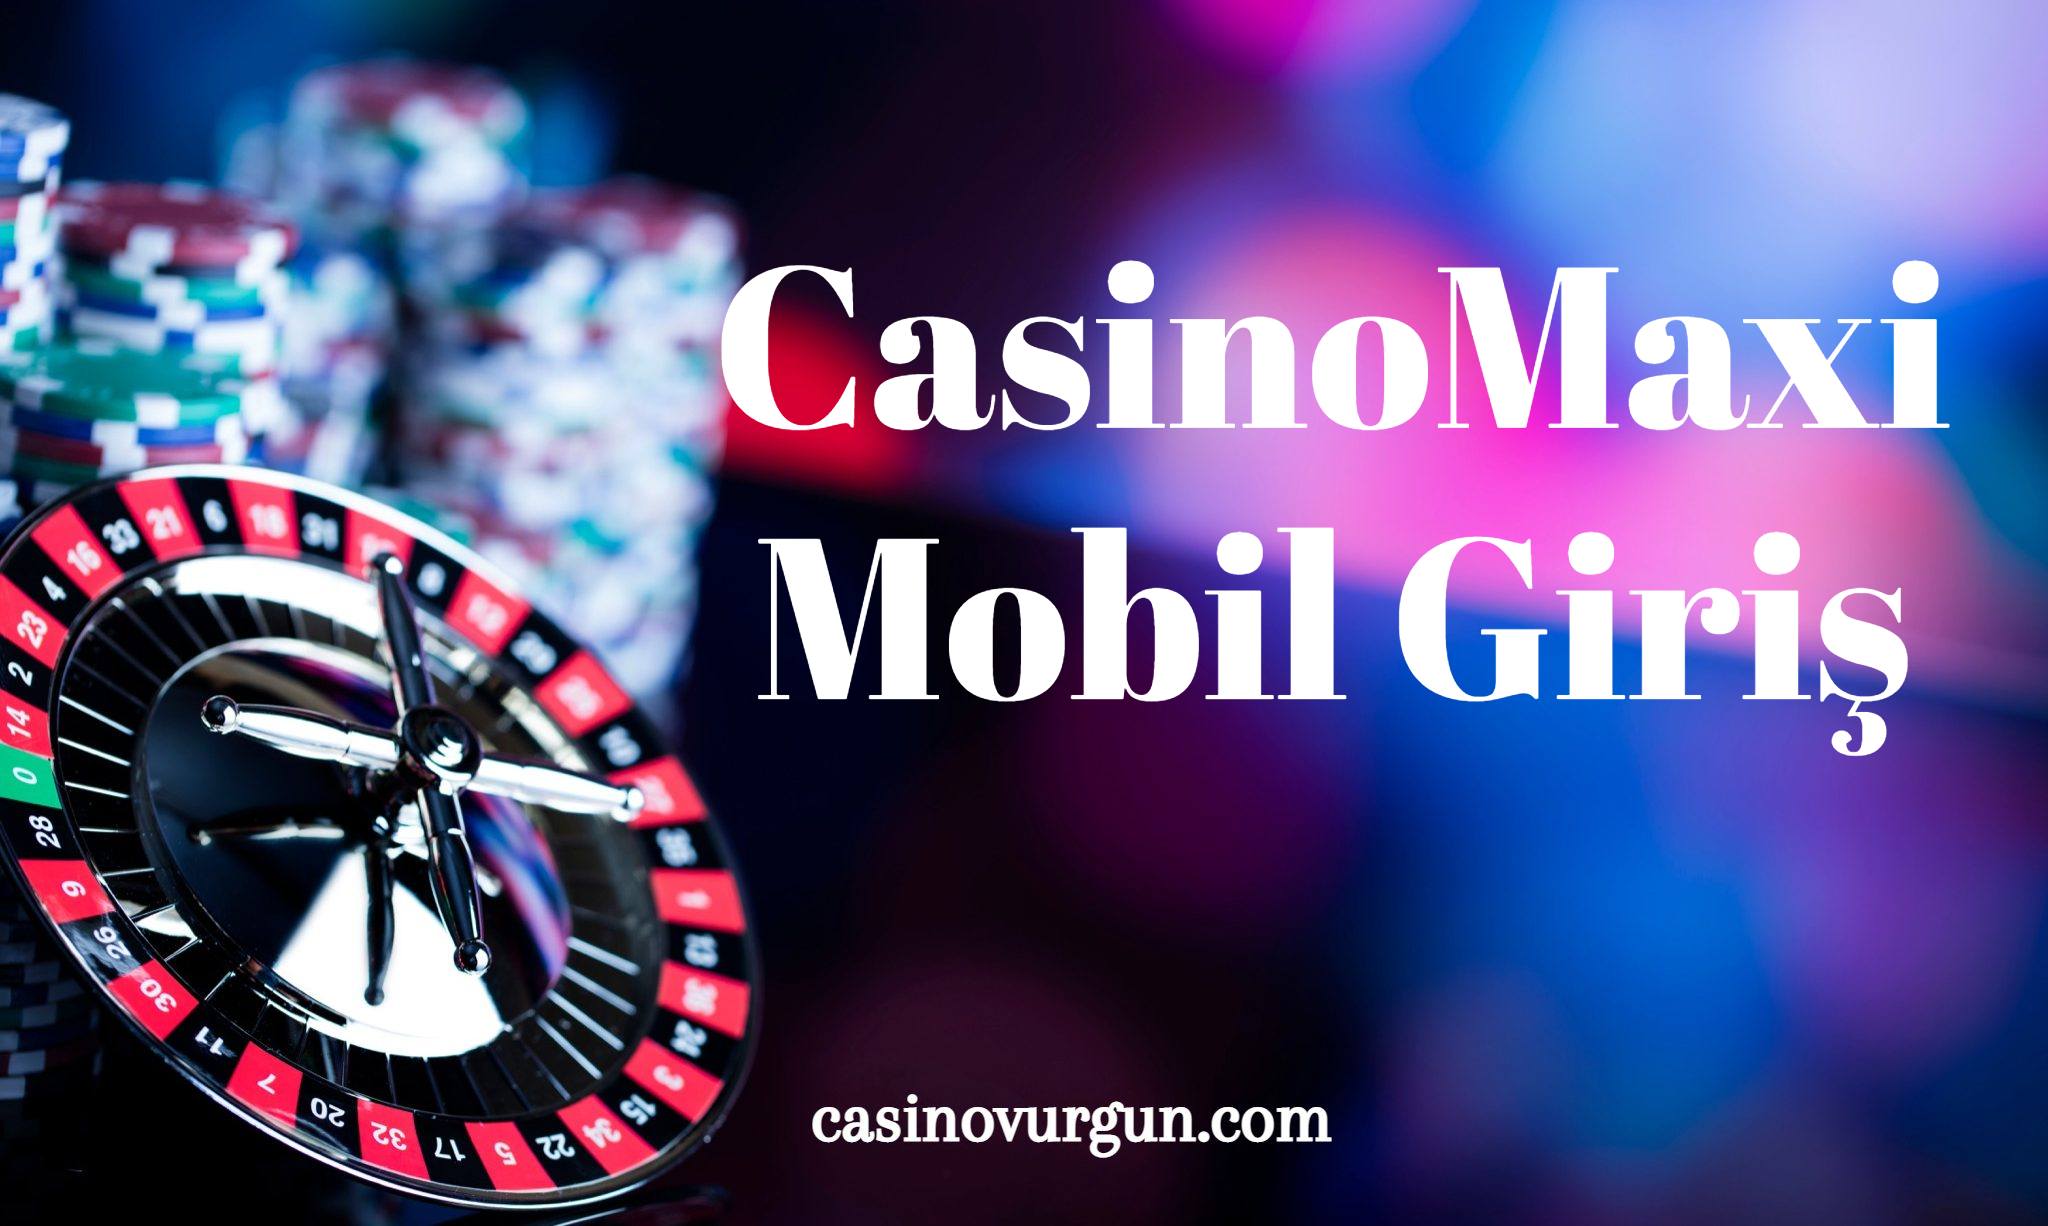 CasinoMaxi Mobil Giriş